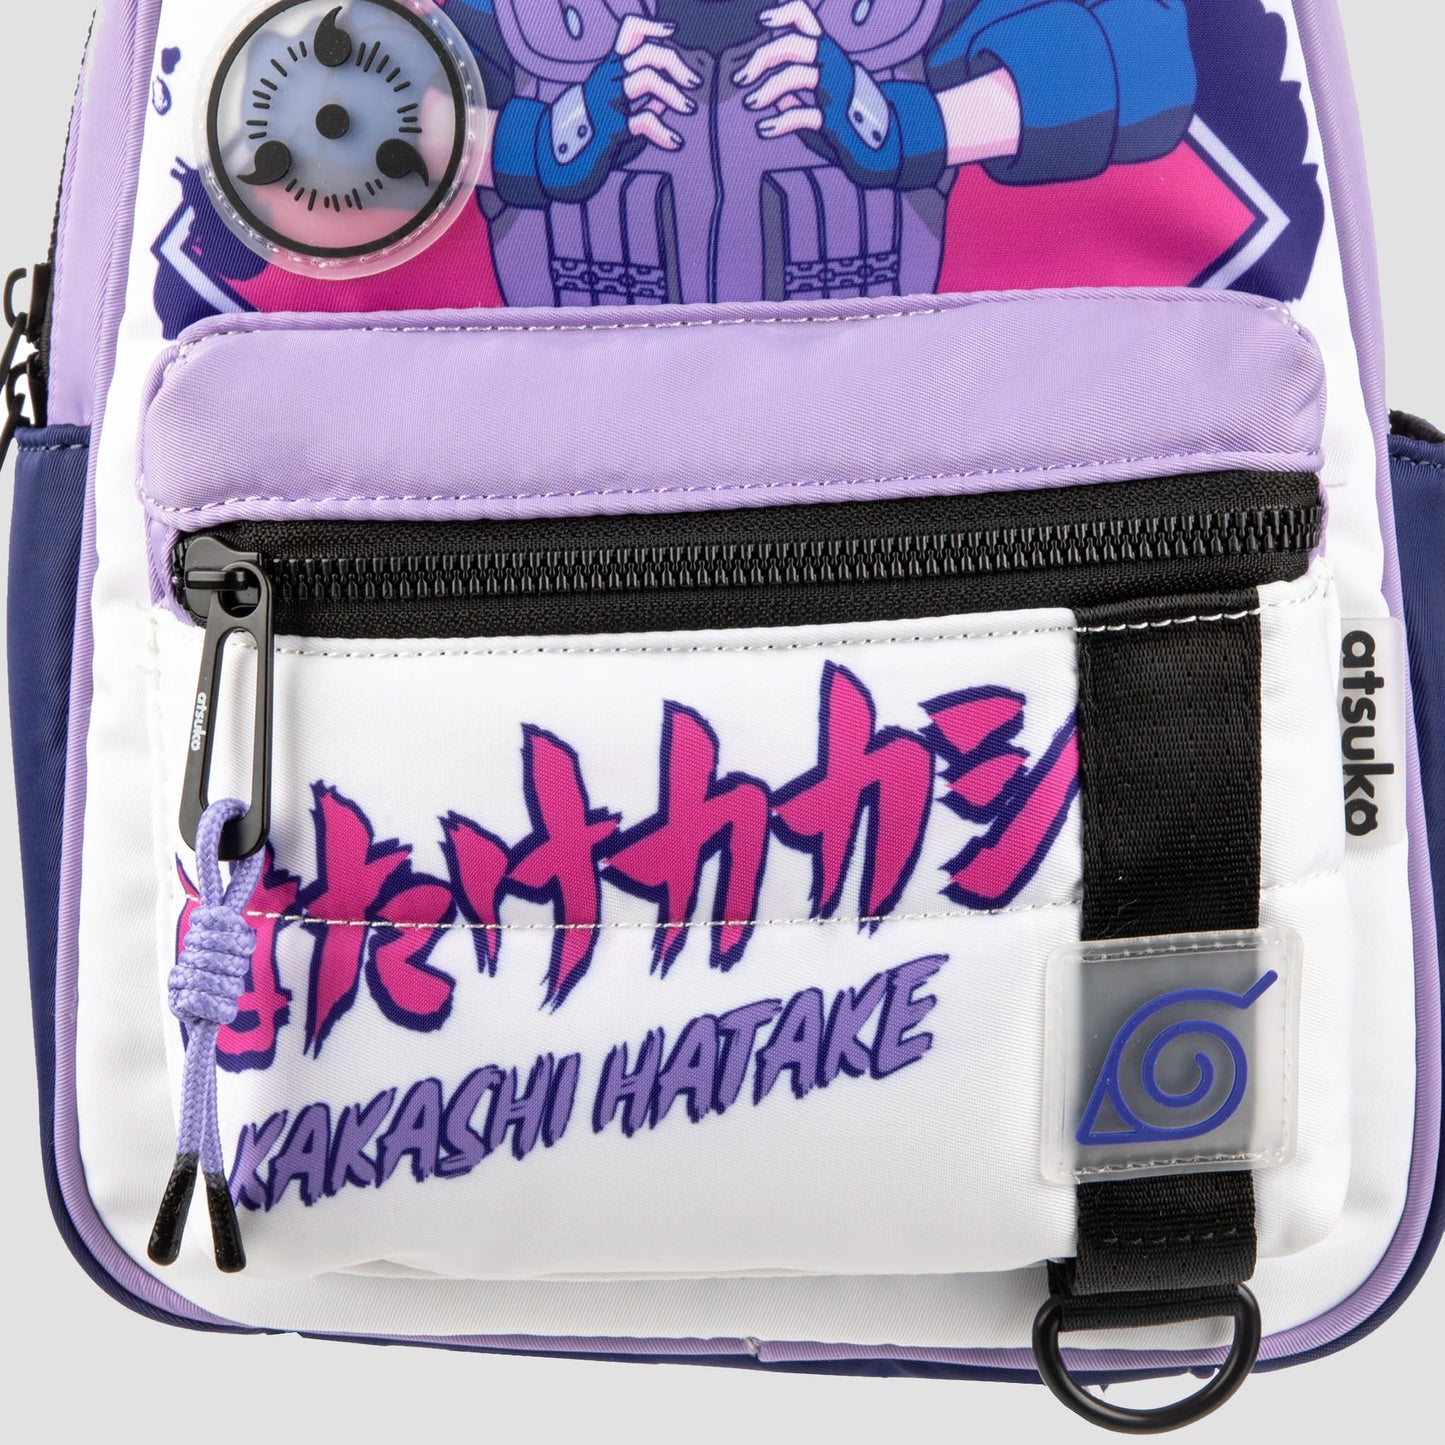 Naruto Shippuden Kakashi Hatake Chibi Mini Backpack